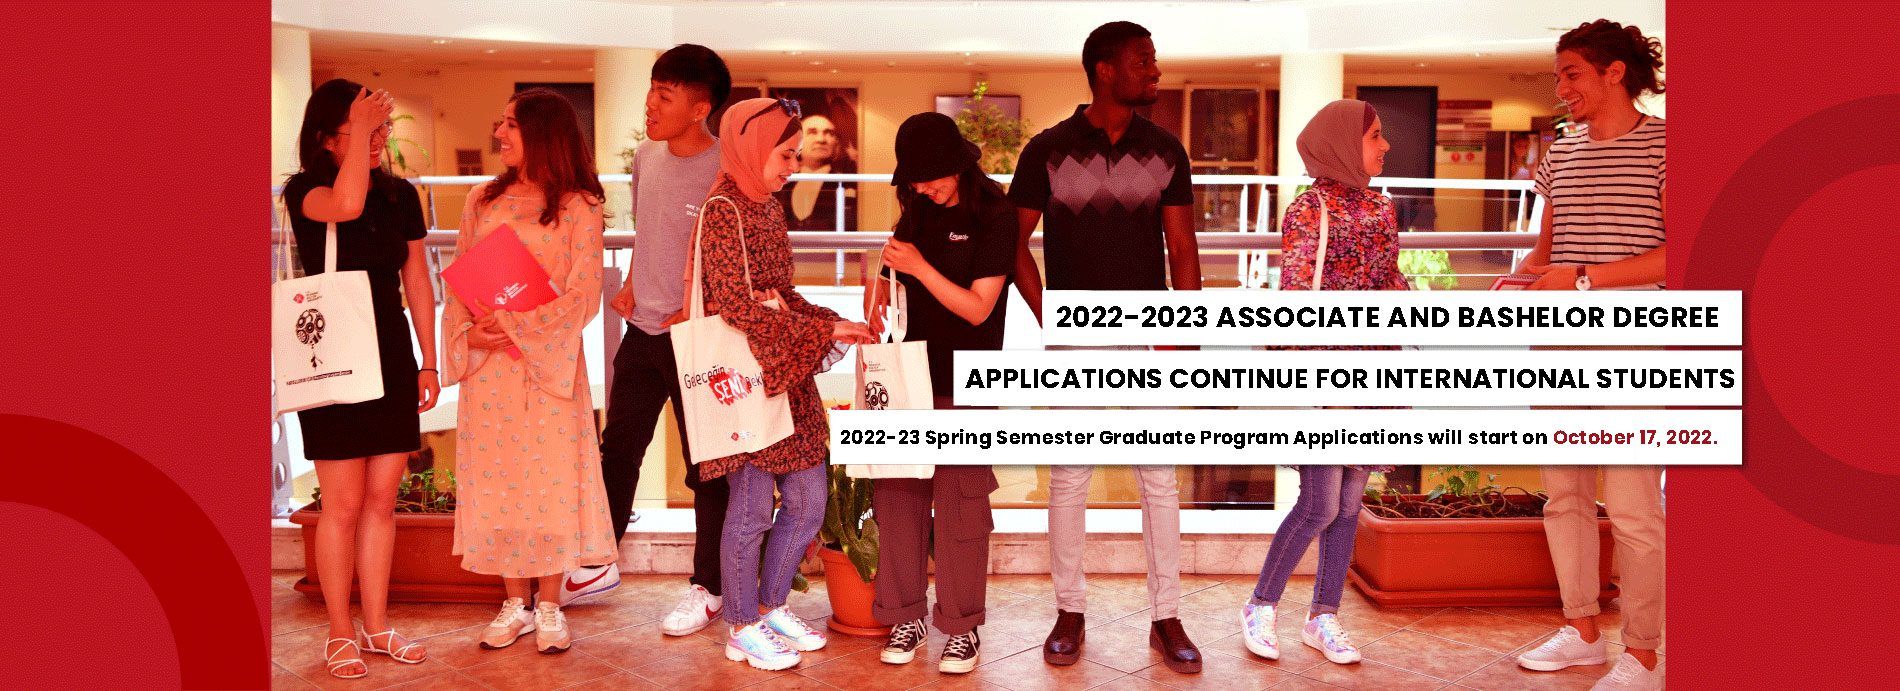 2022-2023 INTERNATIONAL STUDENTS APPLICATIONS